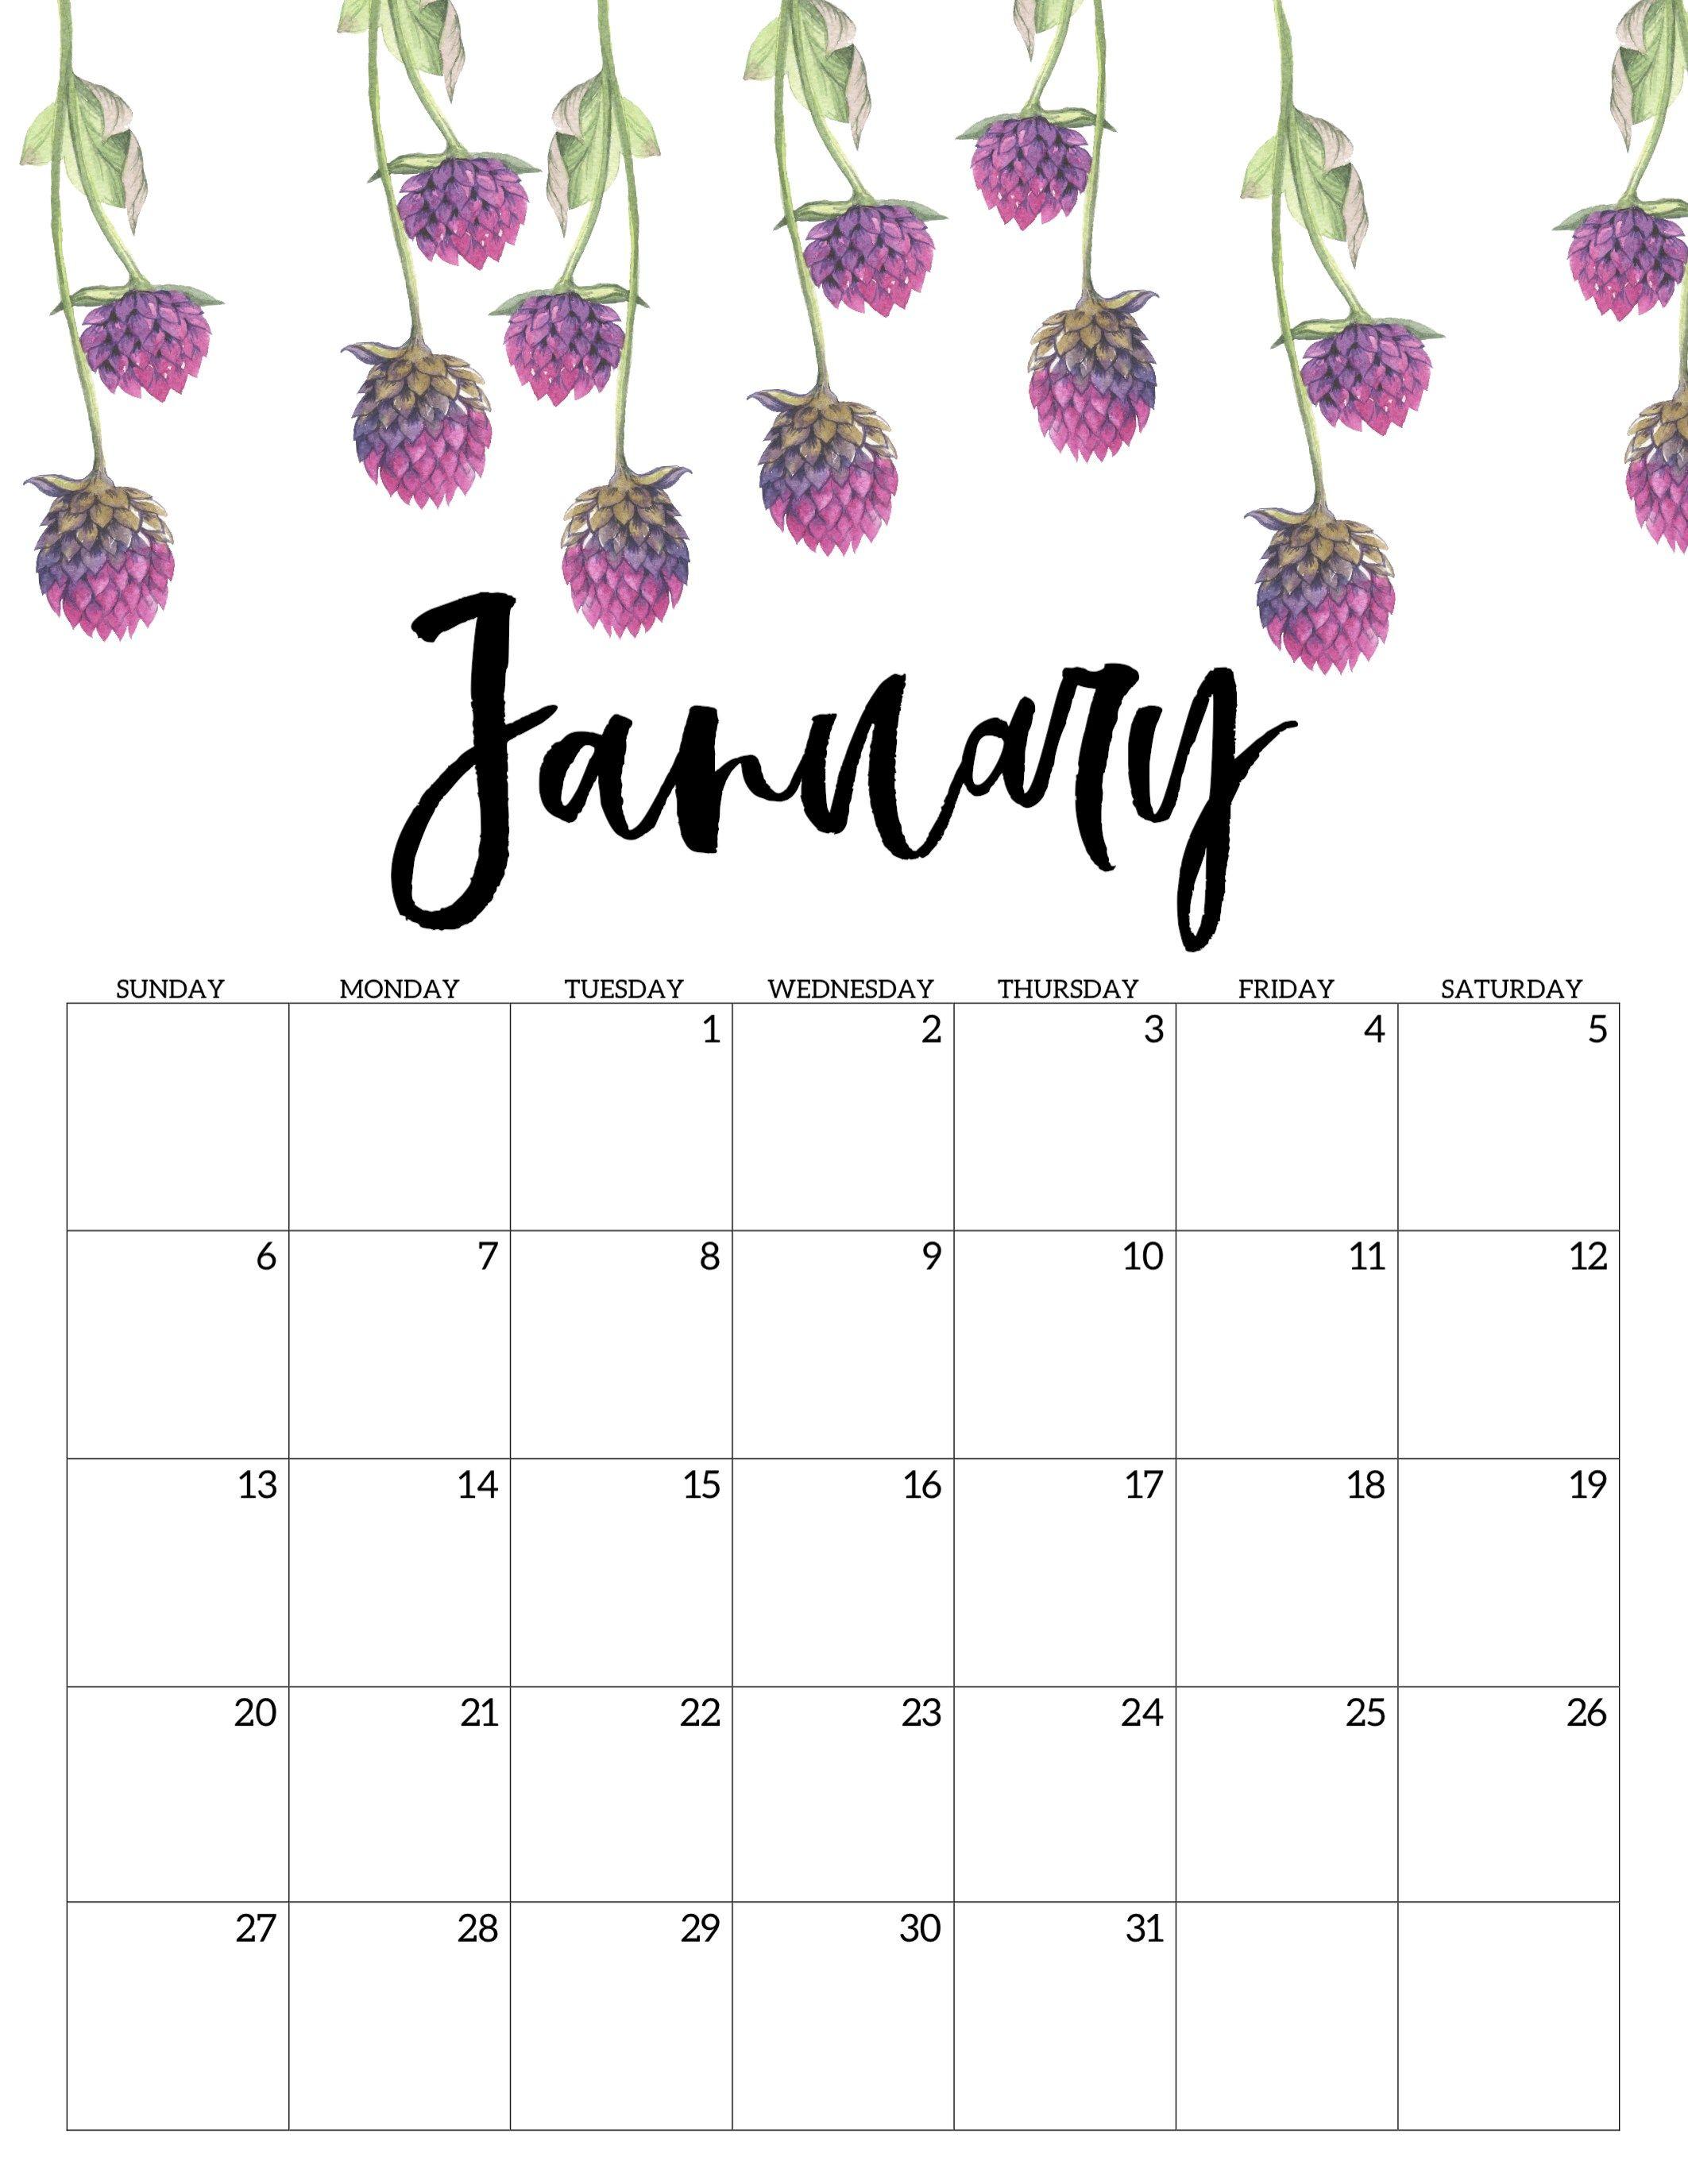 January 2019 Floral Calendar